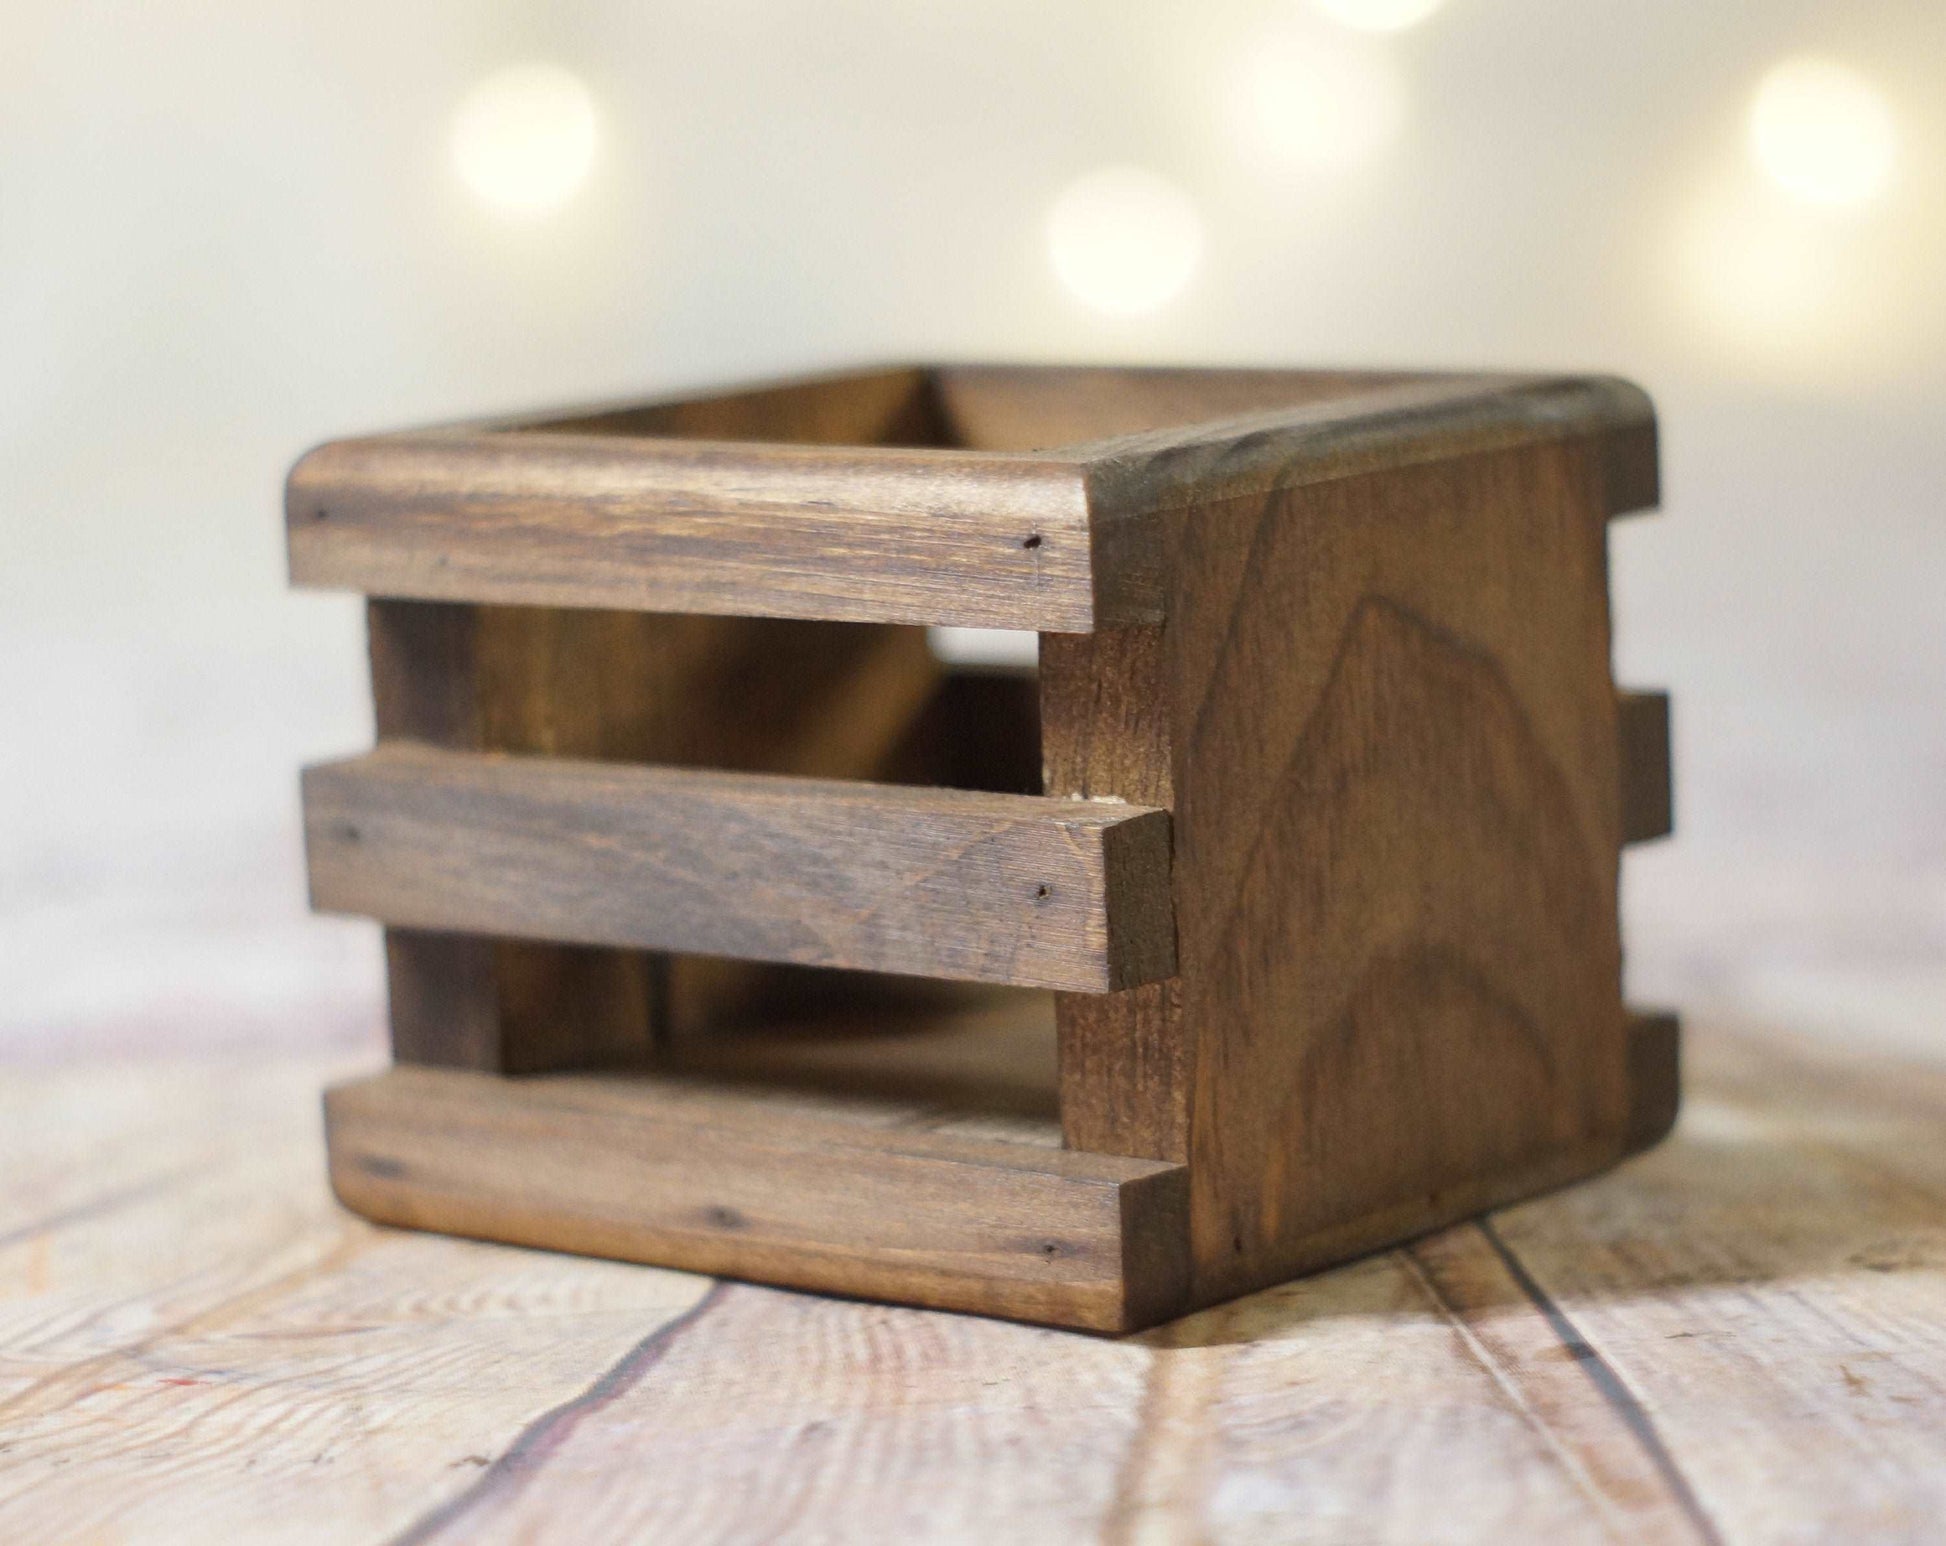 Box Centerpiece Basket, Flower Box, Caddy Gray-HOME DECOR-GFT Woodcraft